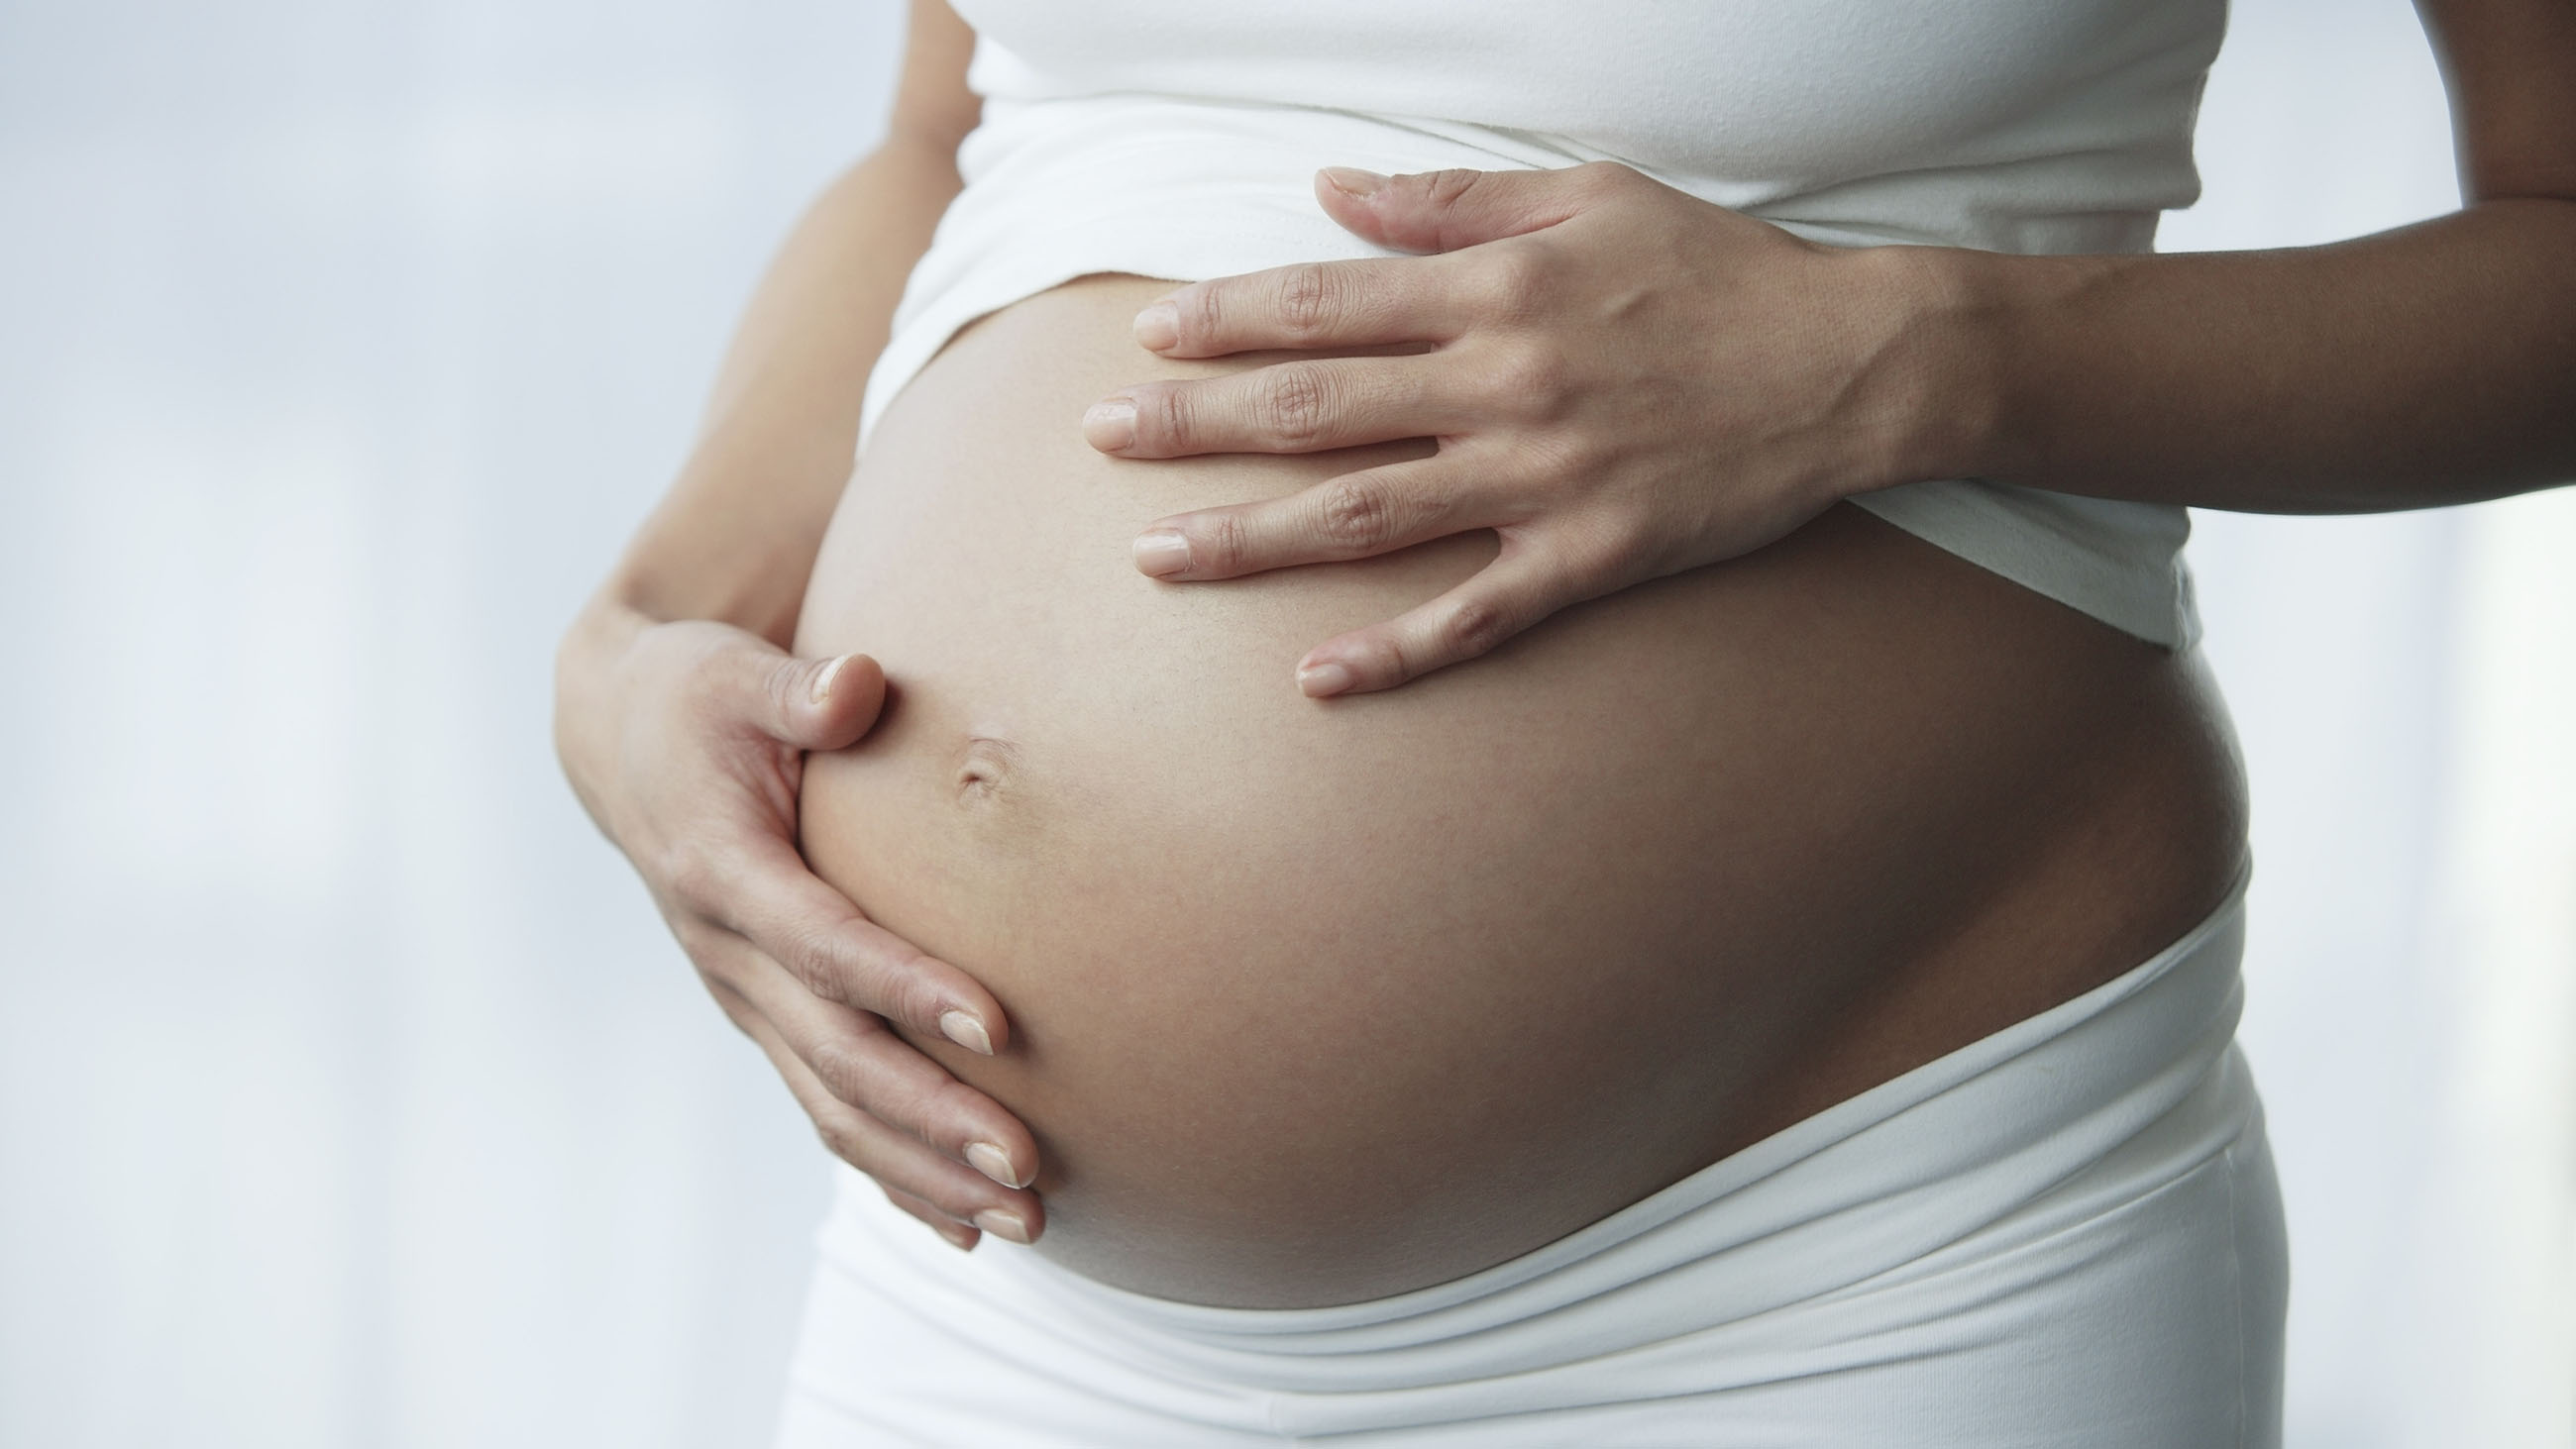 Labors of love: St. Louis-area moms launch startups for pregnancy,  postpartum needs